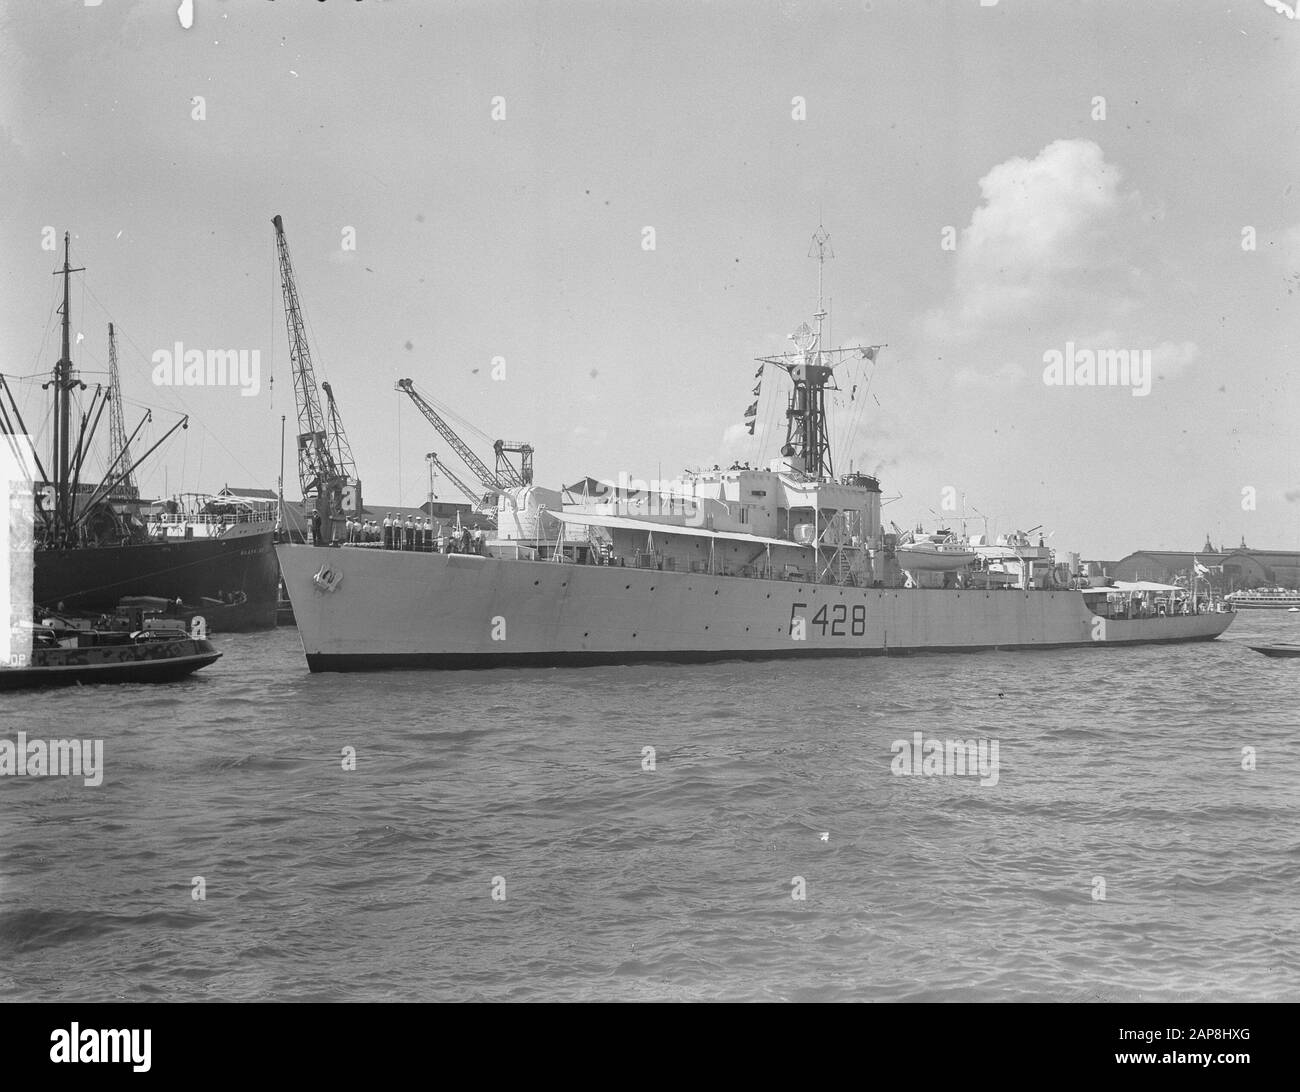 British frigate Loch alvie forwarding Date: 15 July 1950 Keywords: frigates Stock Photo